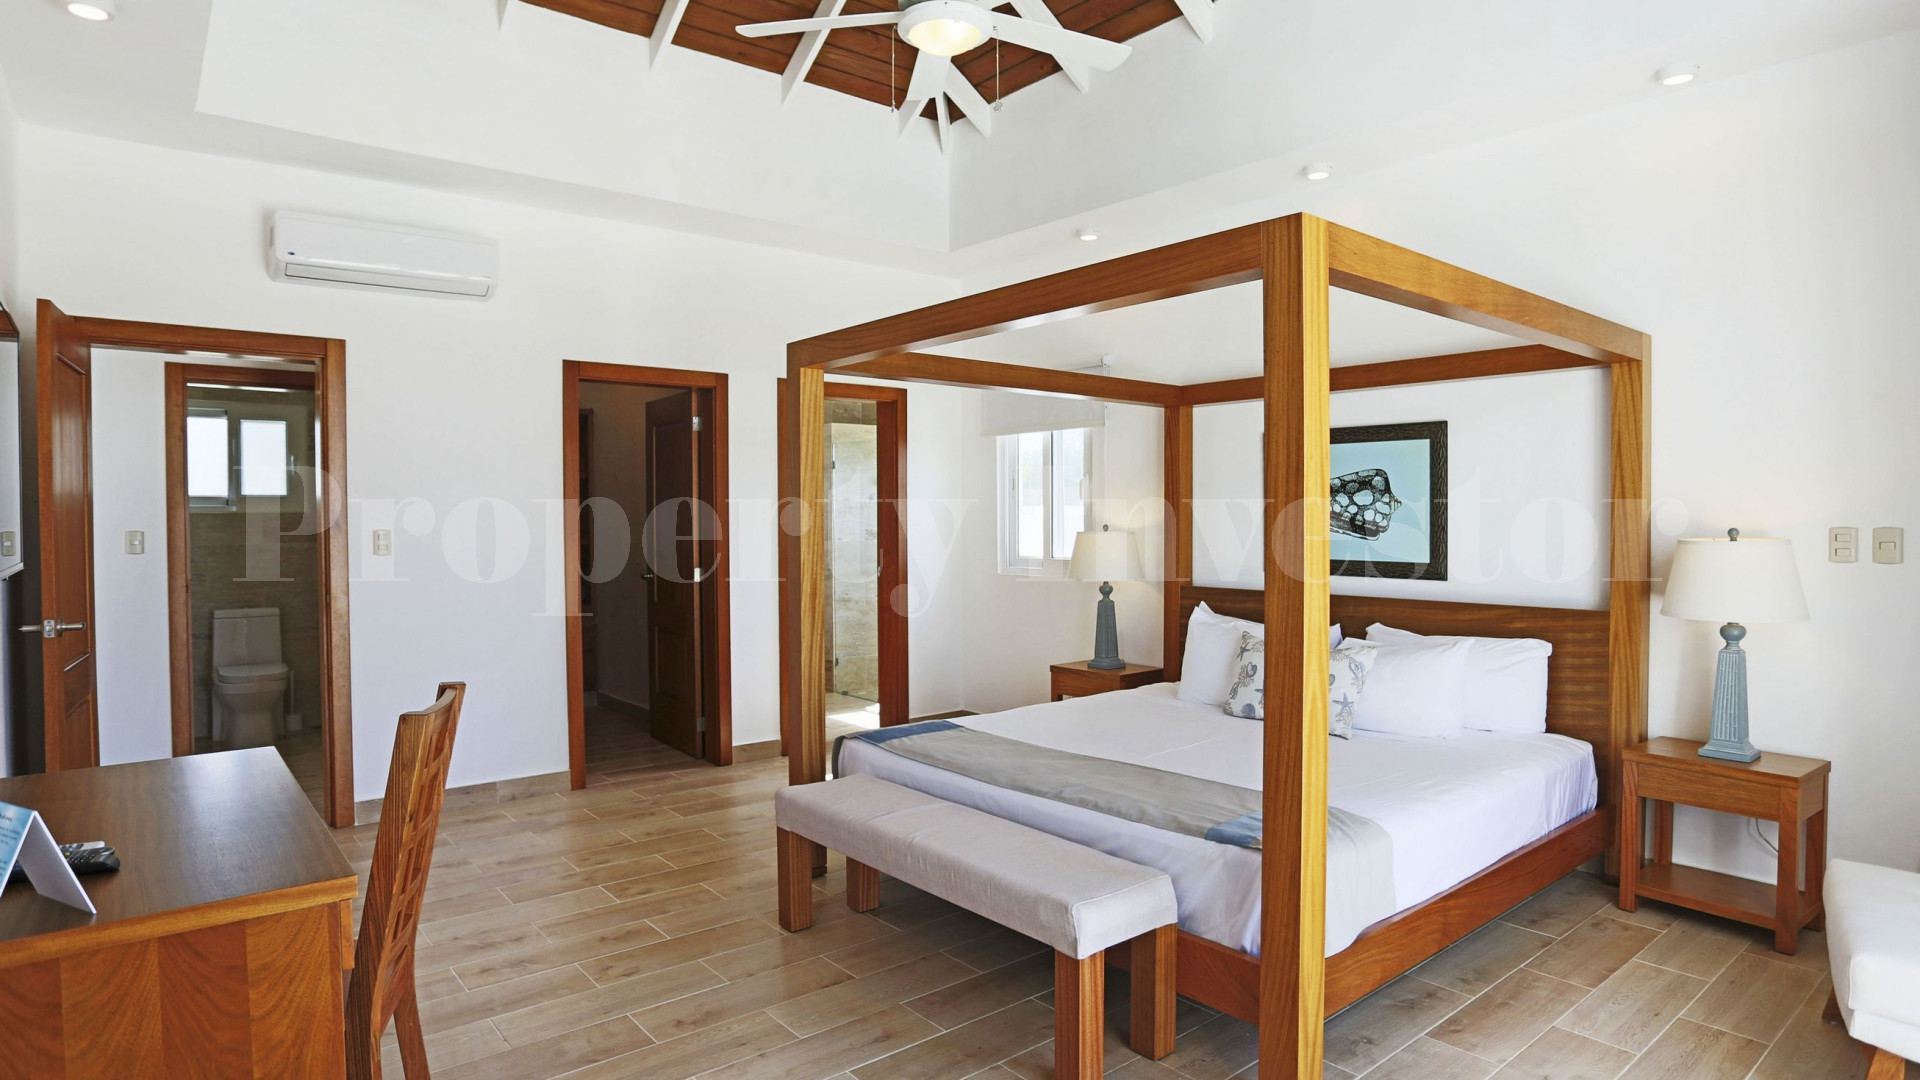 3 Bedroom Oceanview Villa in the Dominican Republic with 30 Year Financing (Villa 17)